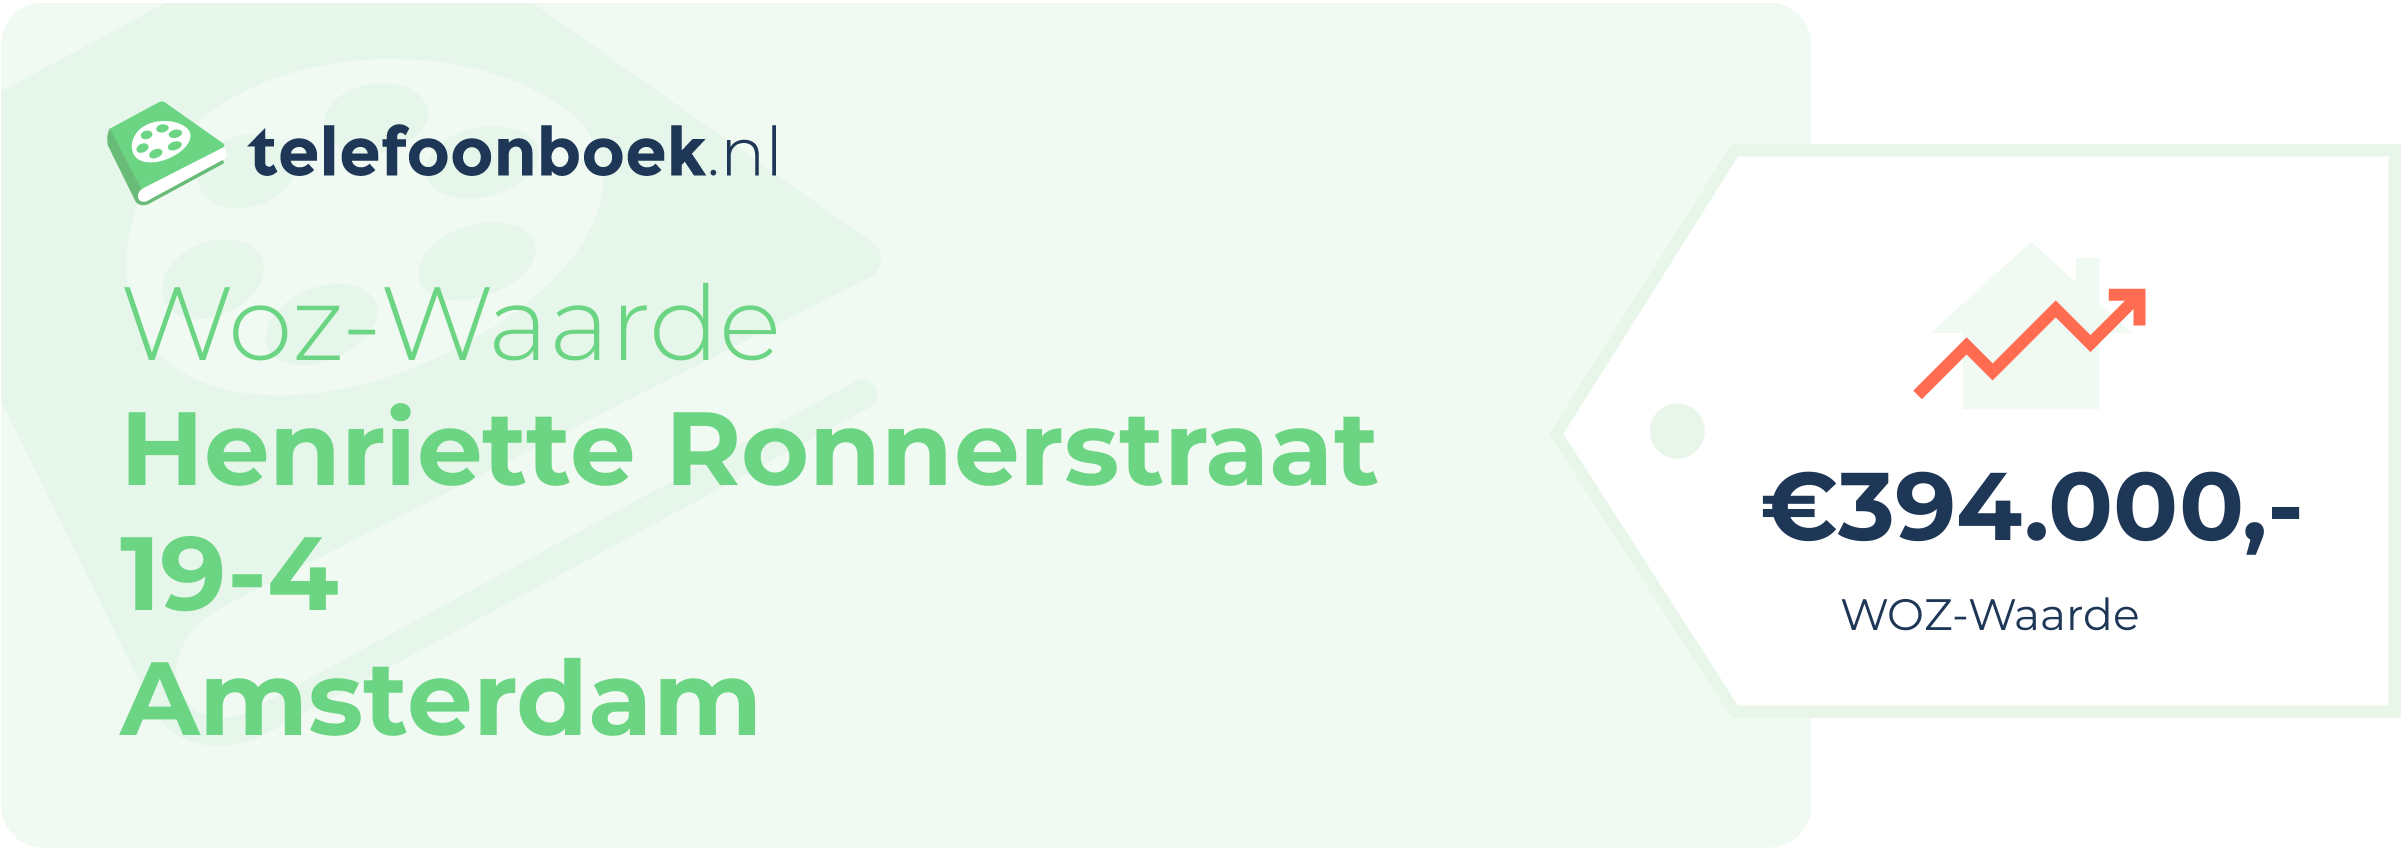 WOZ-waarde Henriette Ronnerstraat 19-4 Amsterdam